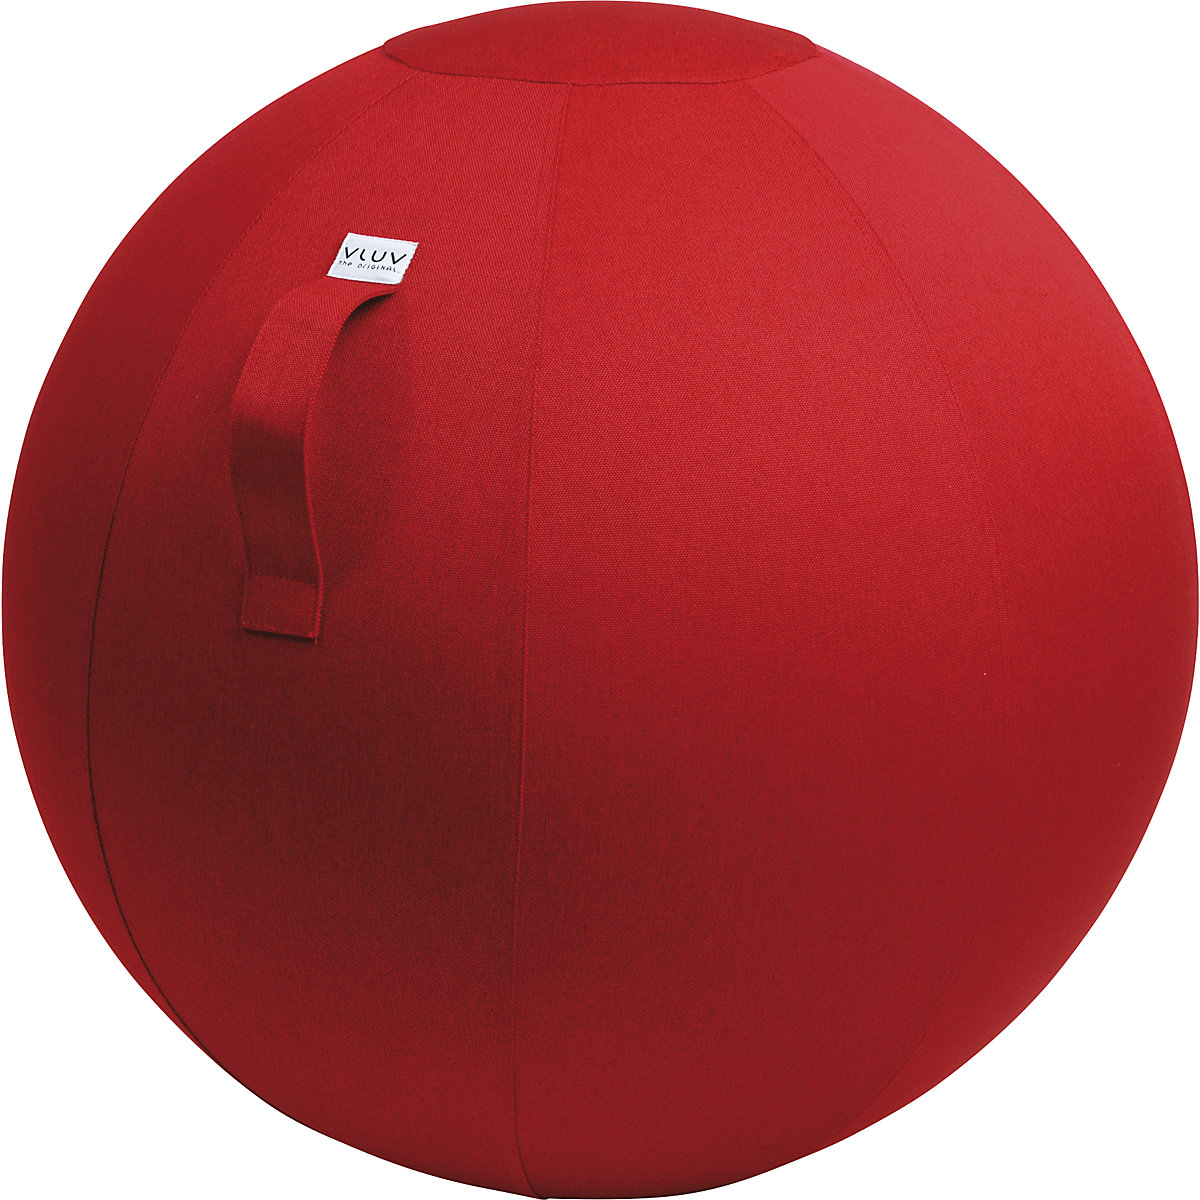 Fitball LEIV – VLUV, rivestimento in tessuto effetto canvas, 700 – 750 mm, rosso rubino-7